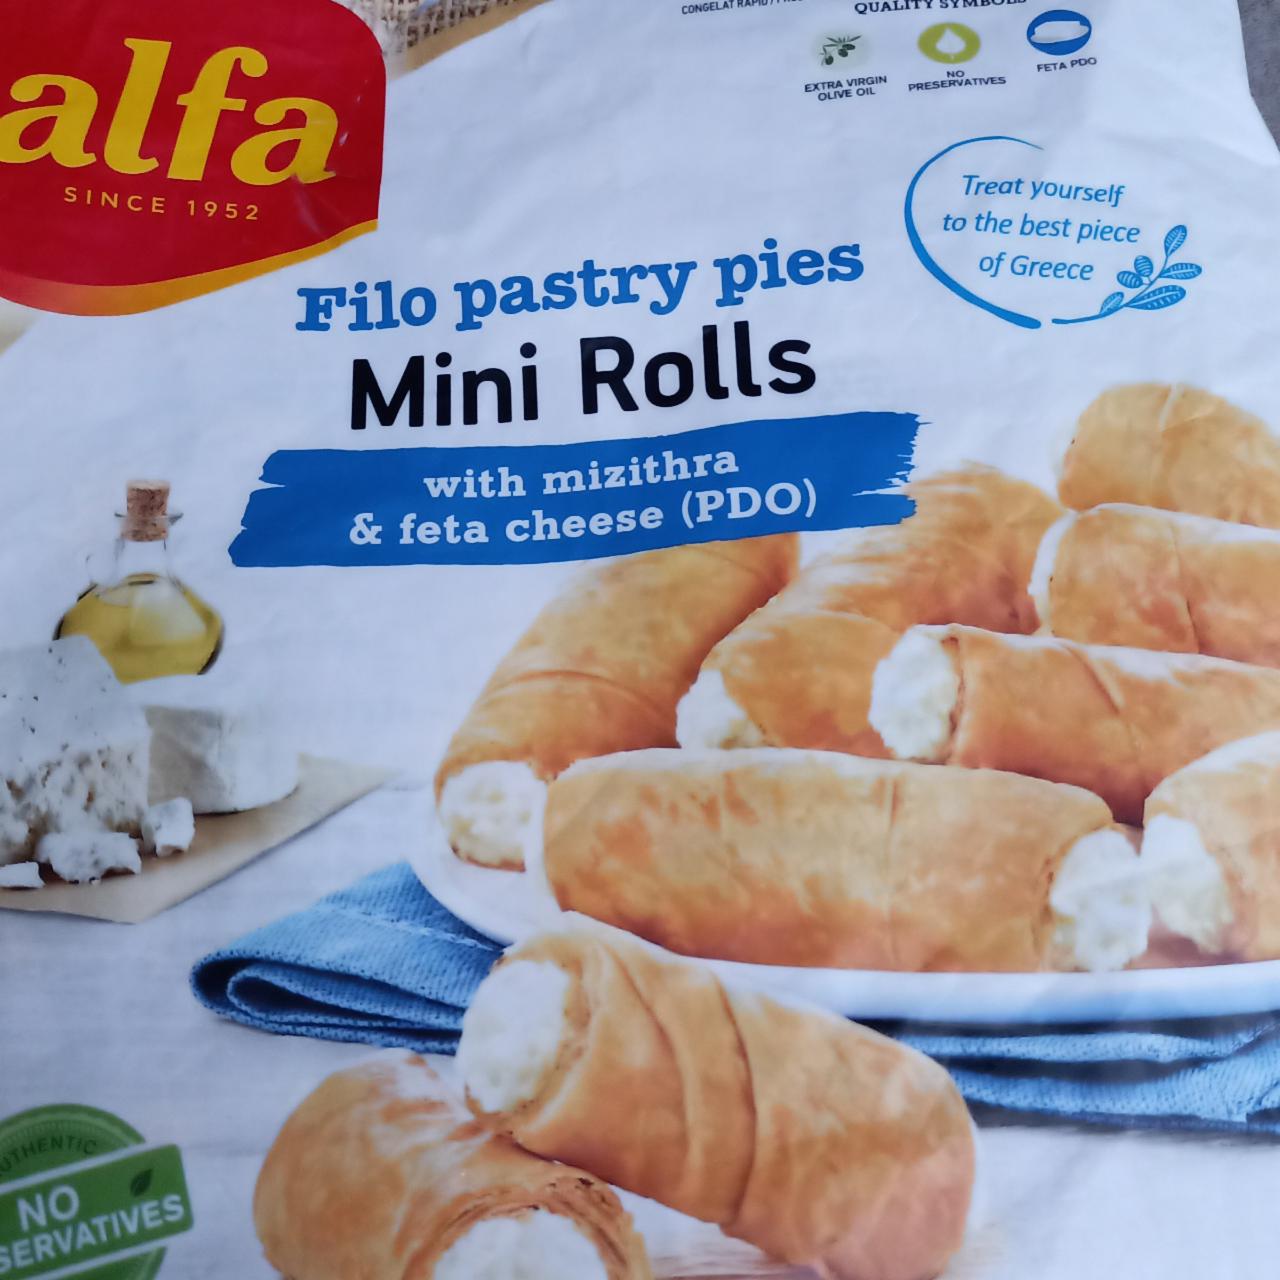 Képek - Filo pastry pies mini rolls with mizithra & fea cheese Alfa